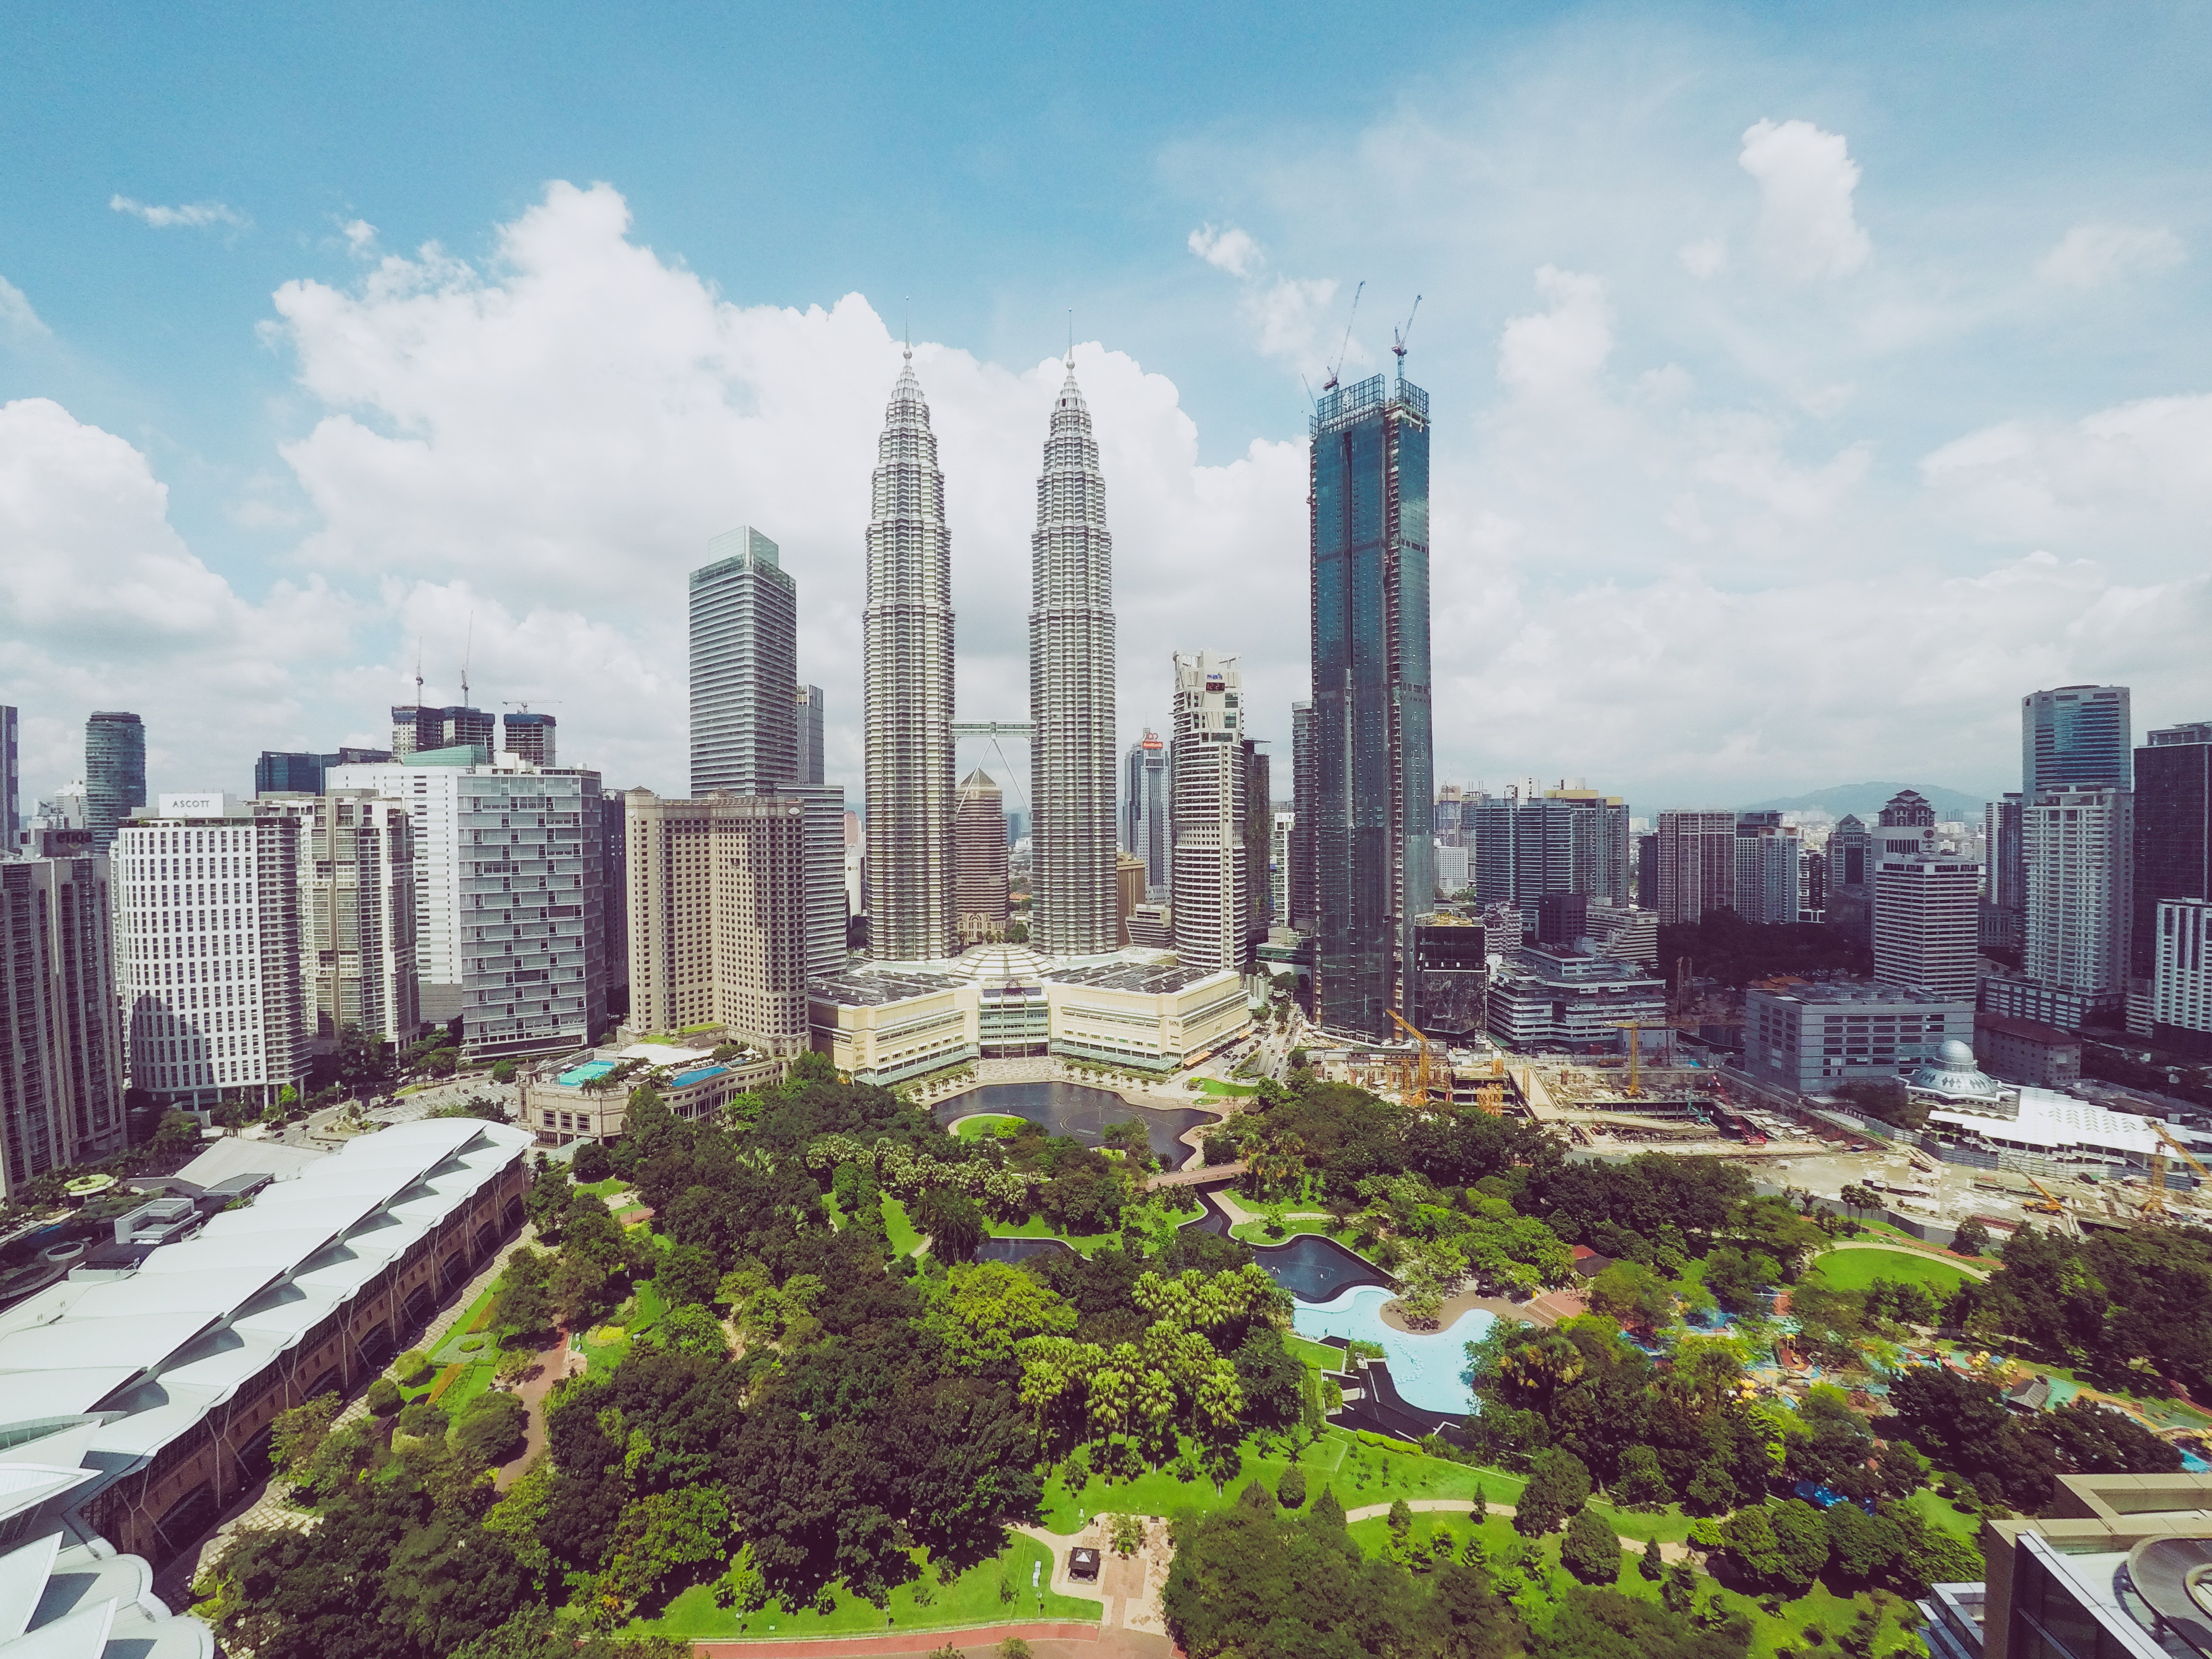 Honestbee temporarily suspends Malaysia operation